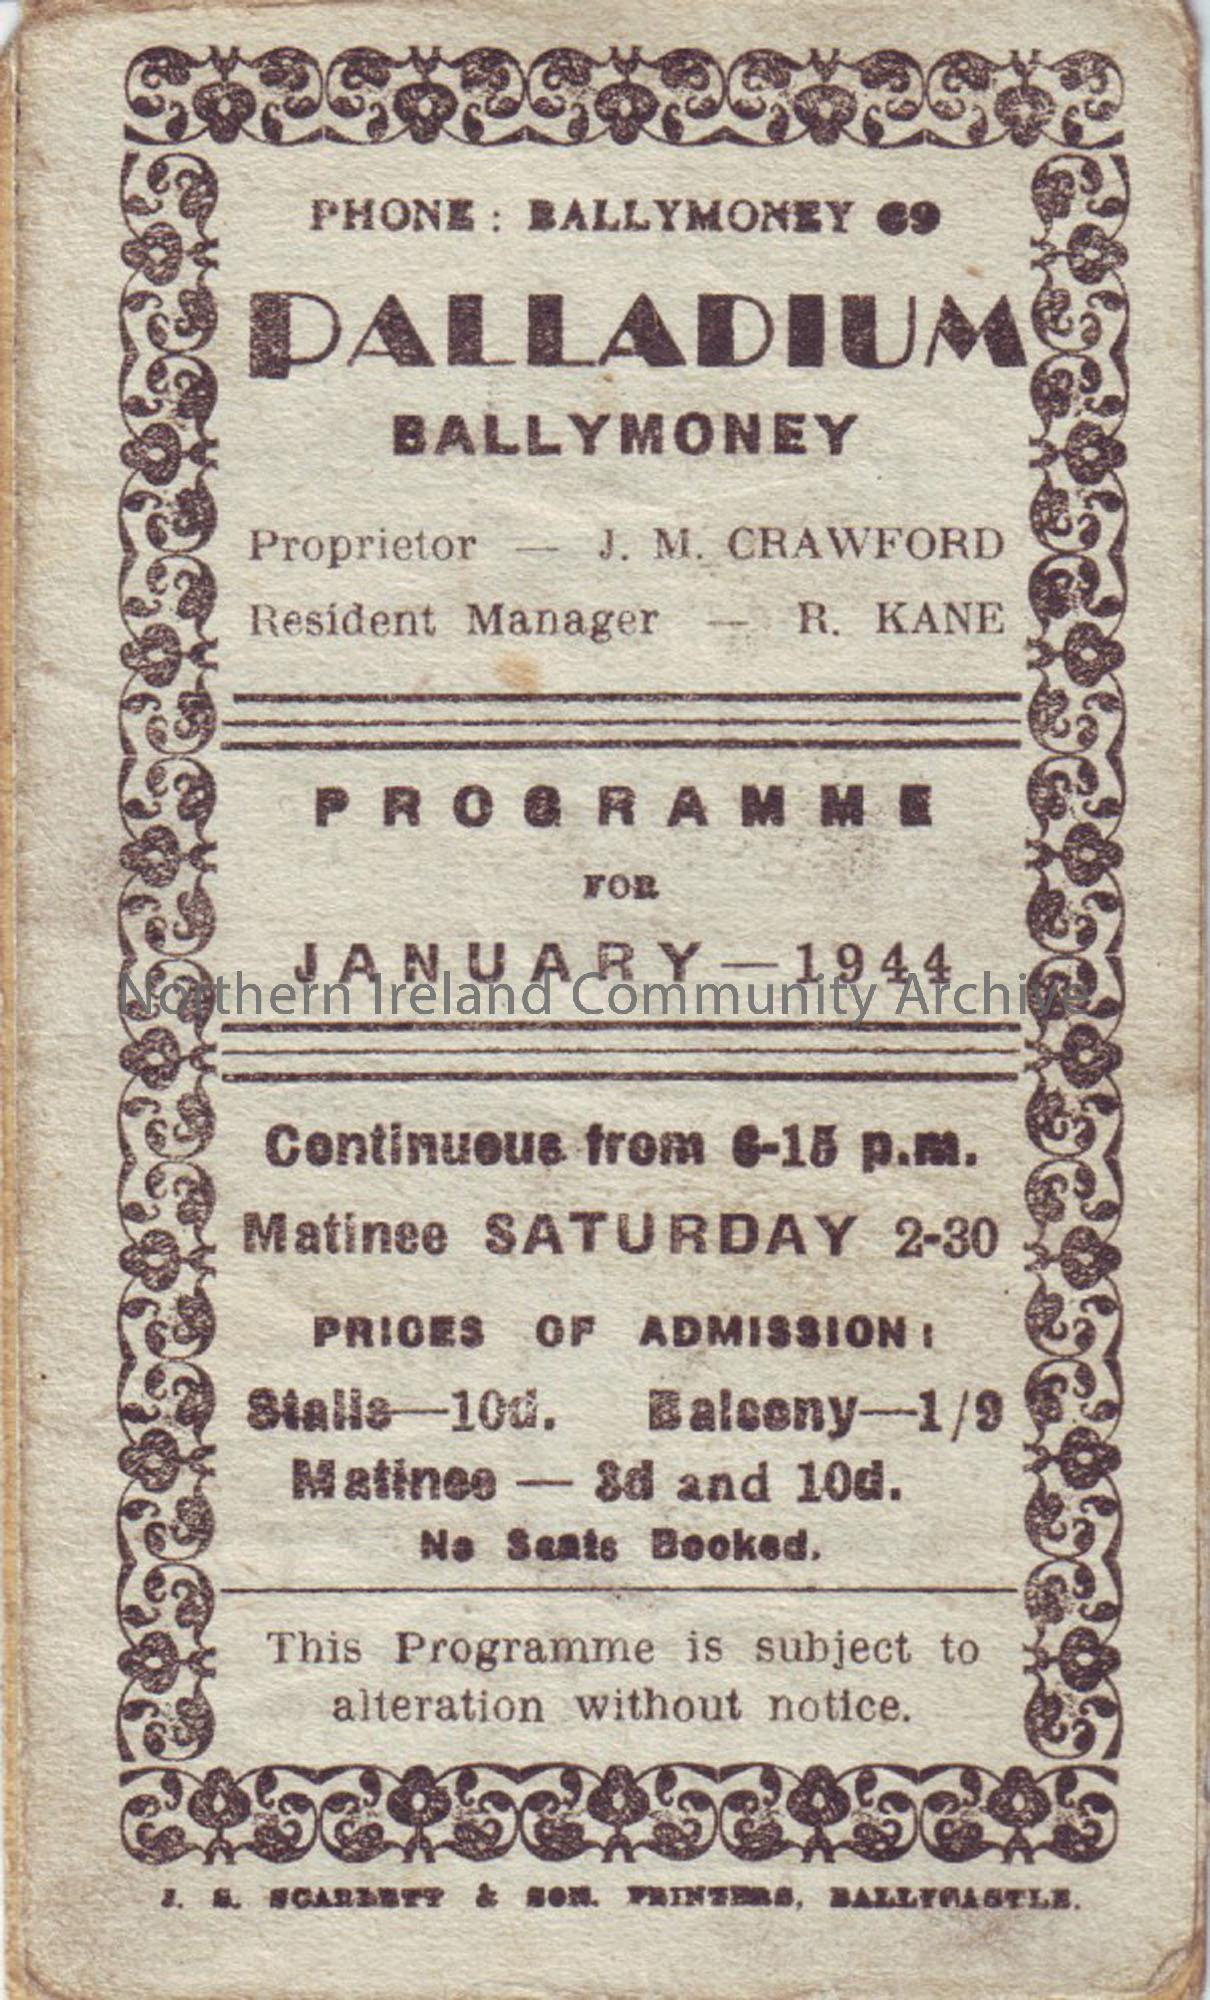 cream programme for Ballymoney Palladium cinema- January and February 1944